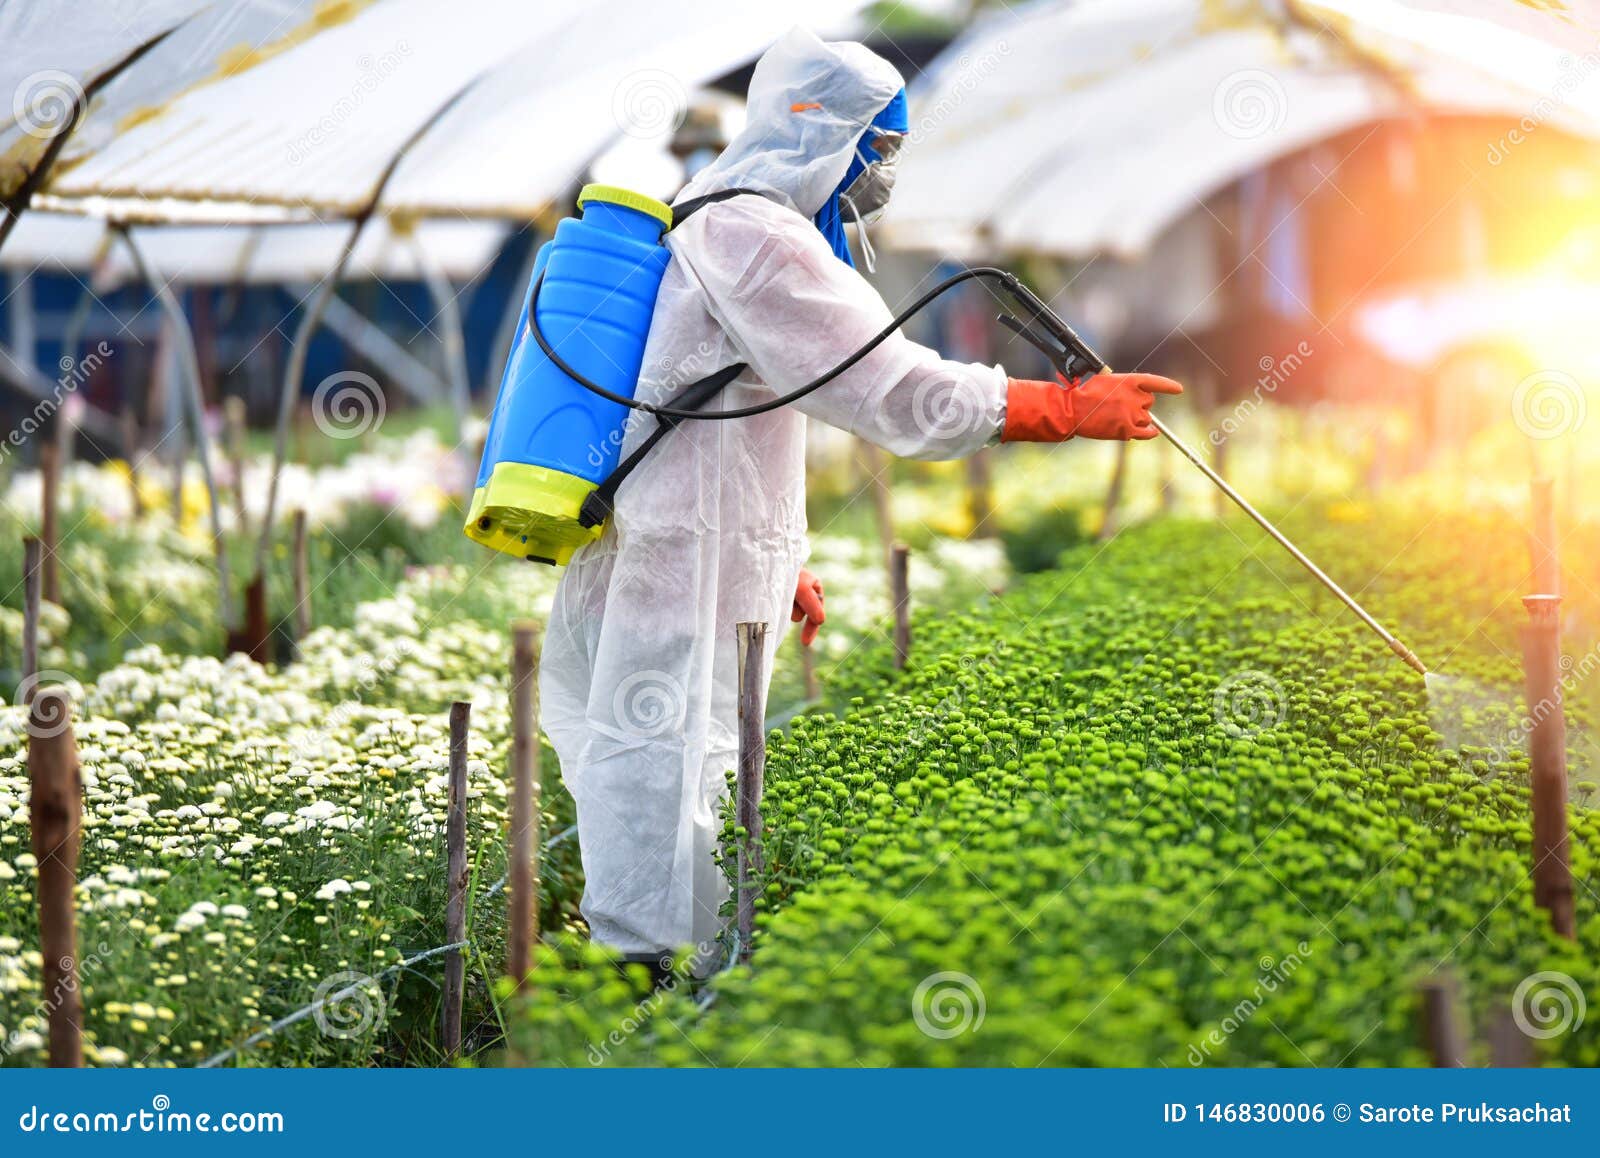 Sprayed Fertilizer On The Flower Farms Royalty-Free Stock Image ...